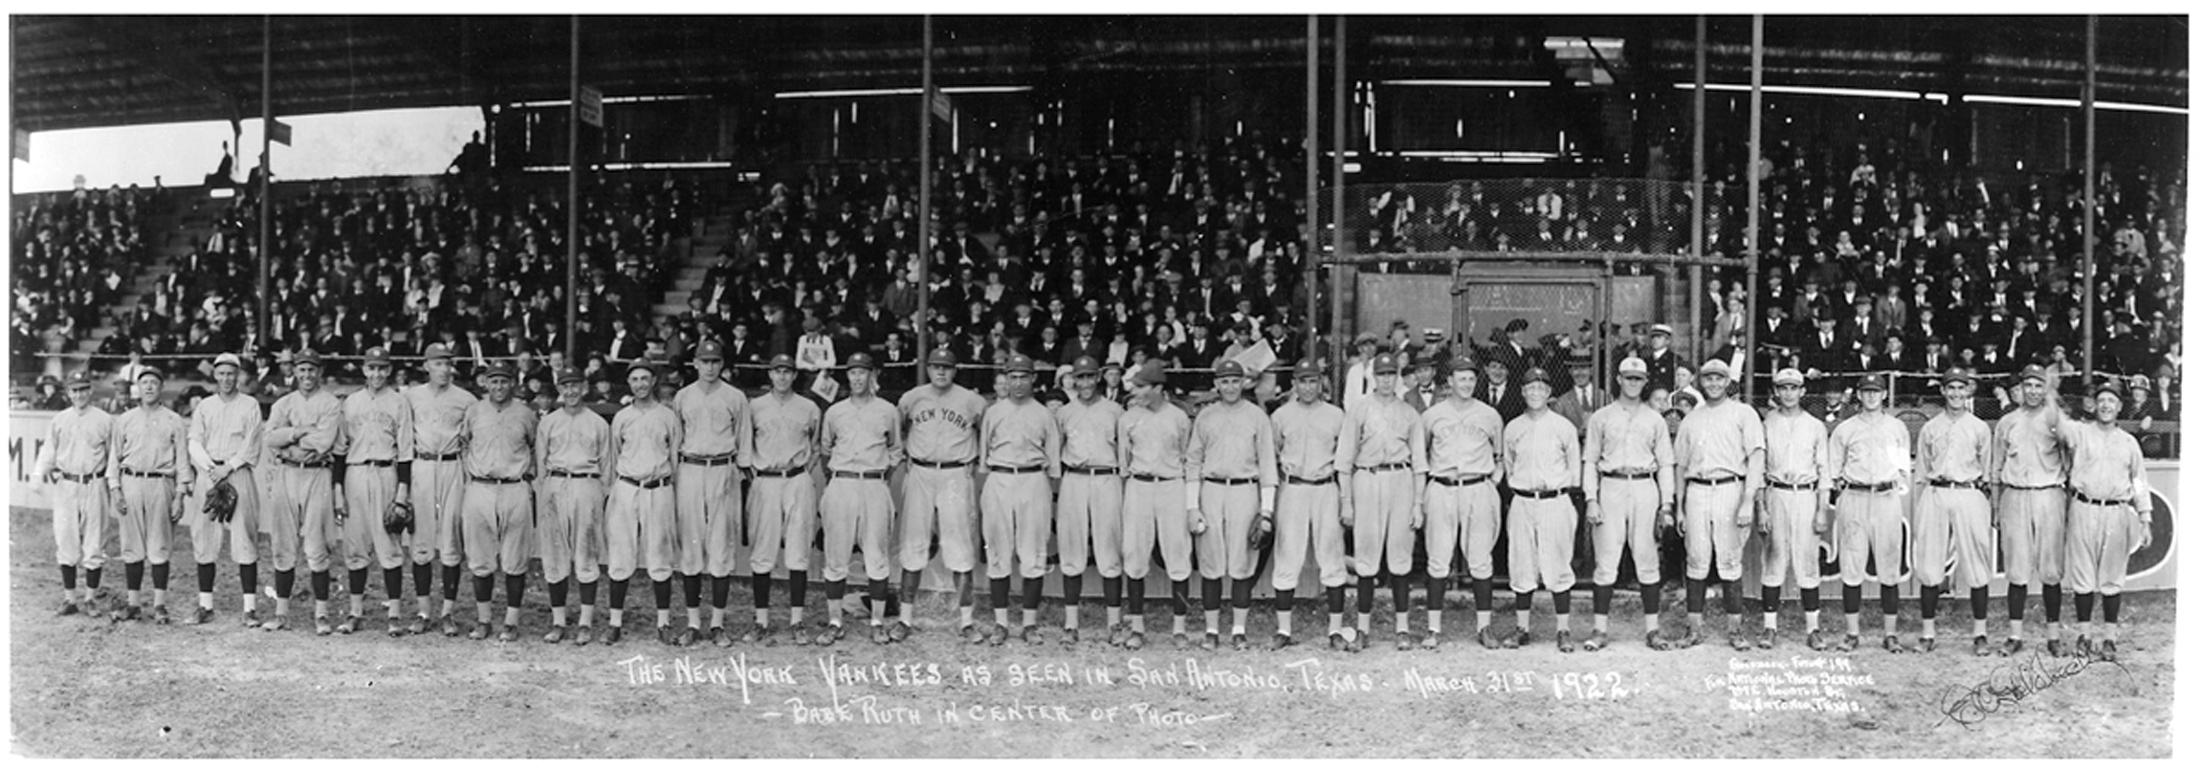 Eugene O. Goldbeck Black and White Photograph - Babe Ruth and the New York Yankees, San Antonio, TX